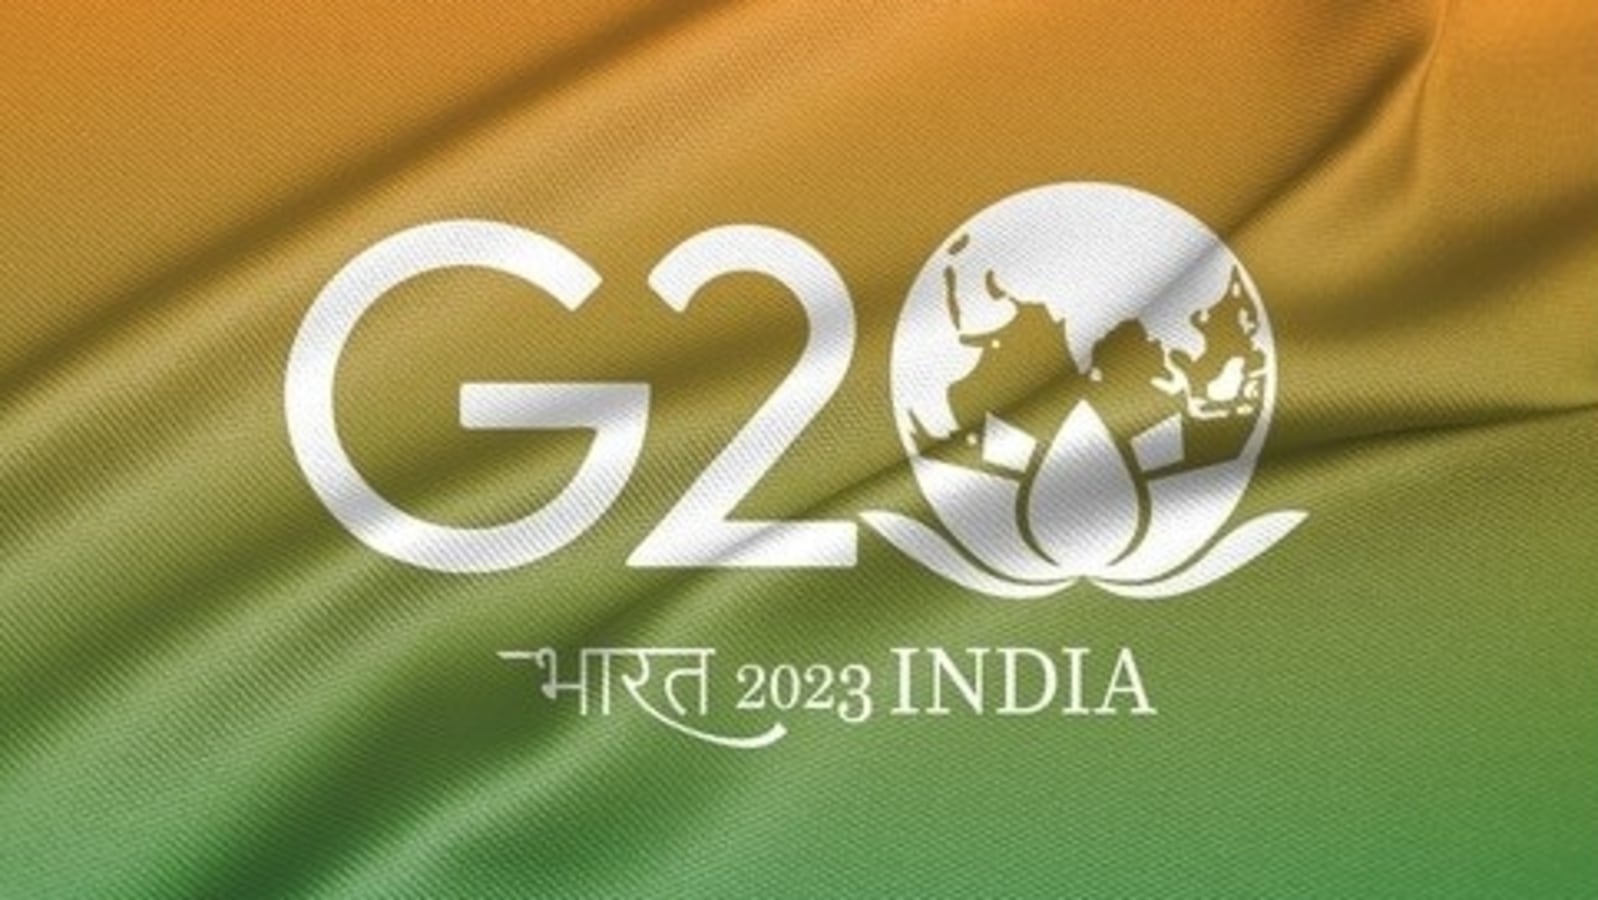 India's Leadership in the G20 Summit: The G20 Declaration condemns terrorism Bhatt & Joshi Associates